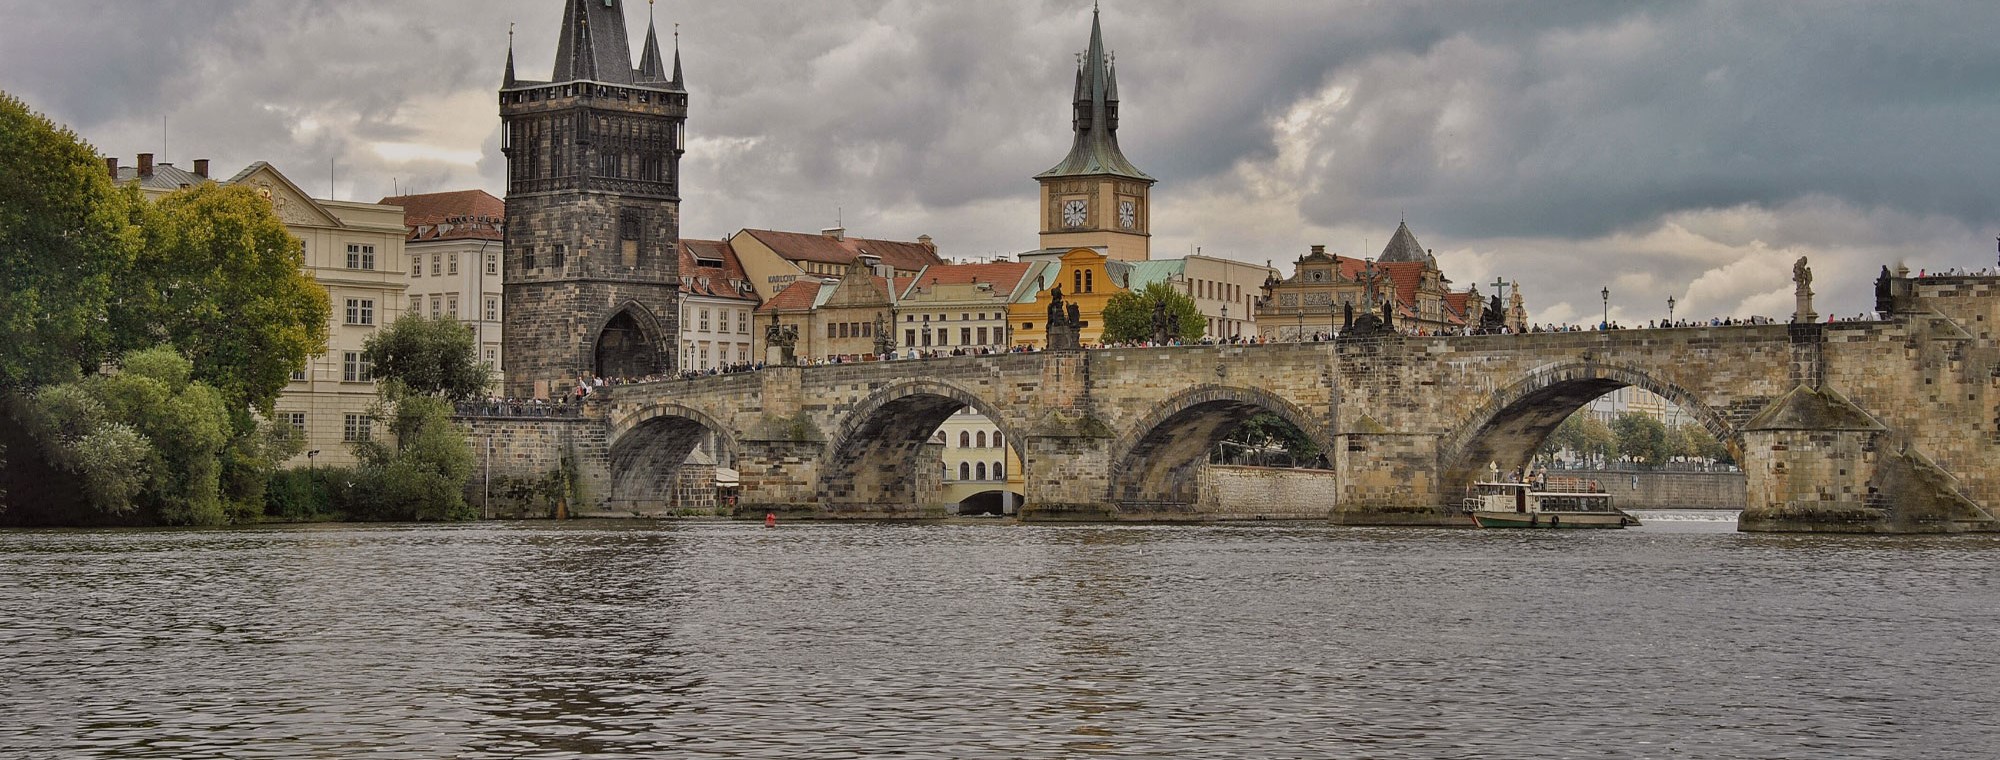 Czech Republic tours of Charles Bridge, Prague